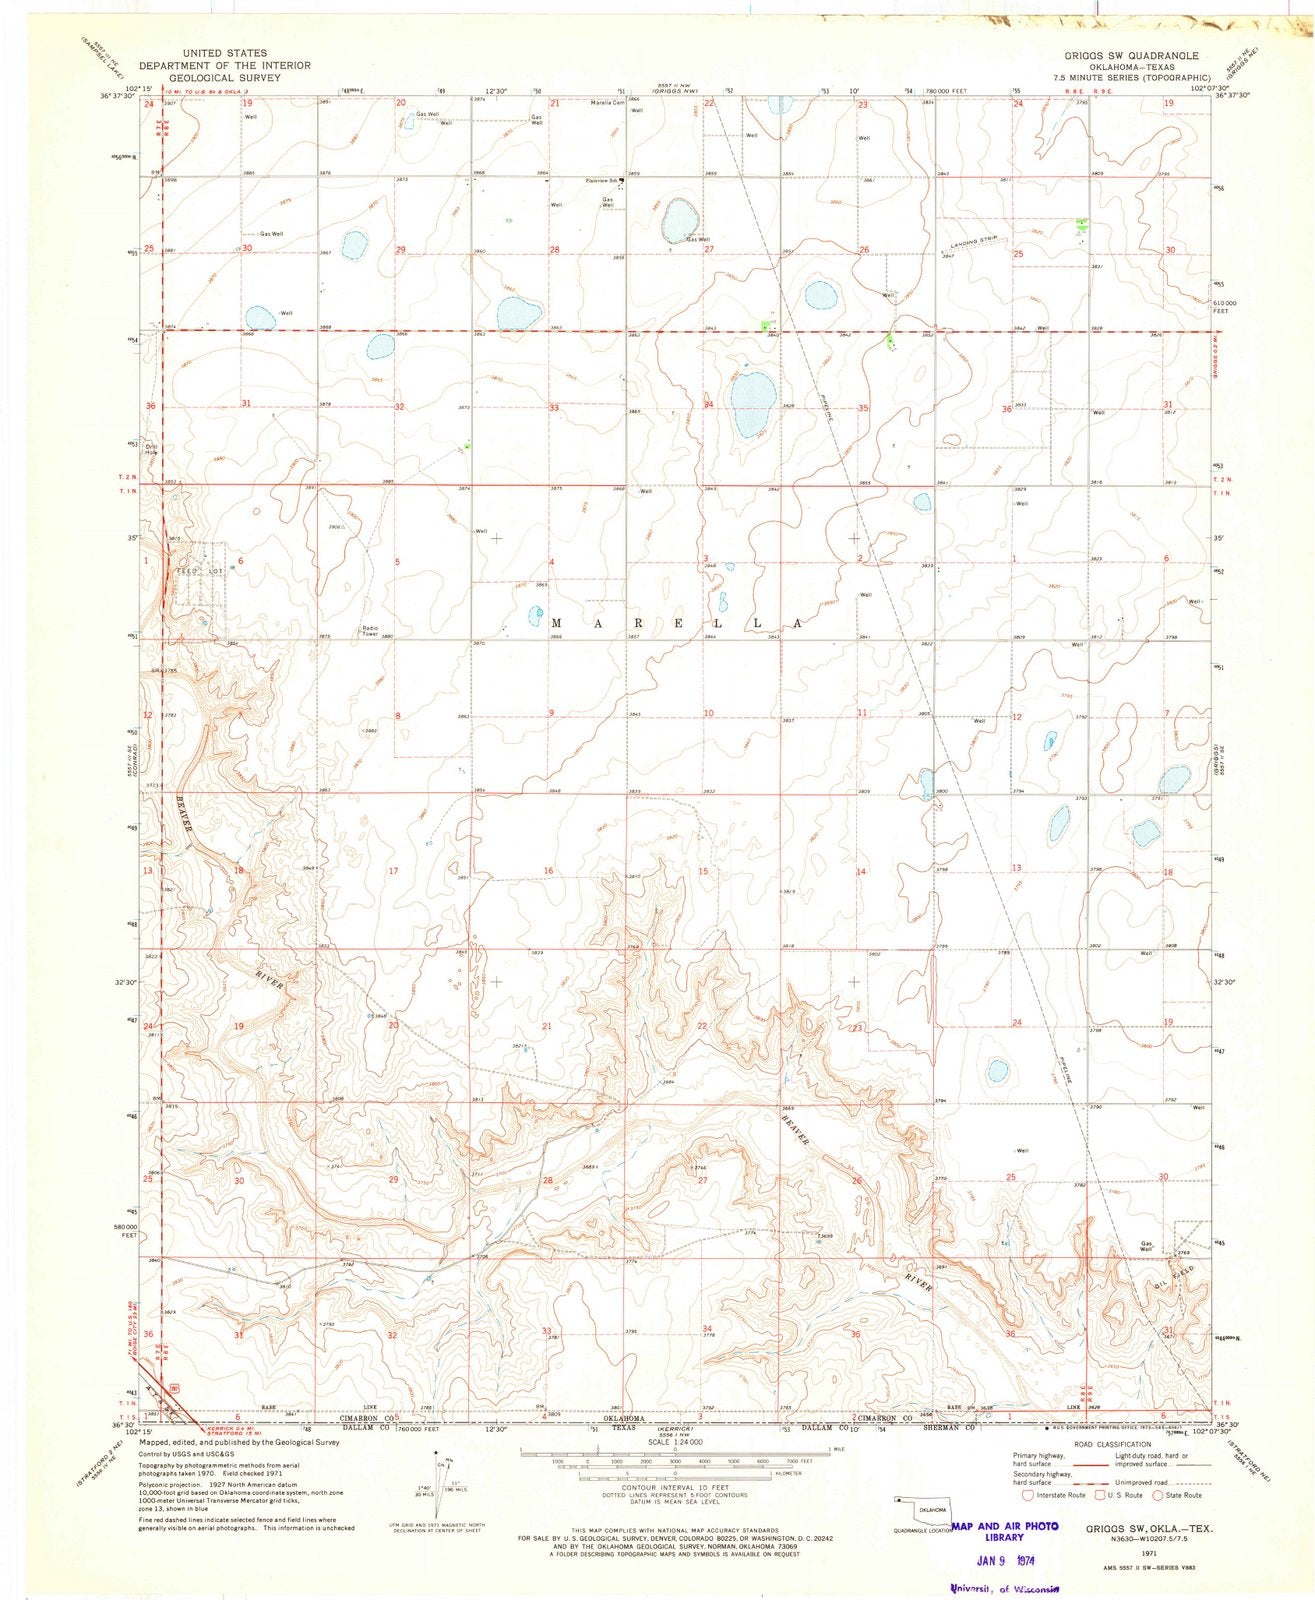 1971 Griggs, OK - Oklahoma - USGS Topographic Map v3